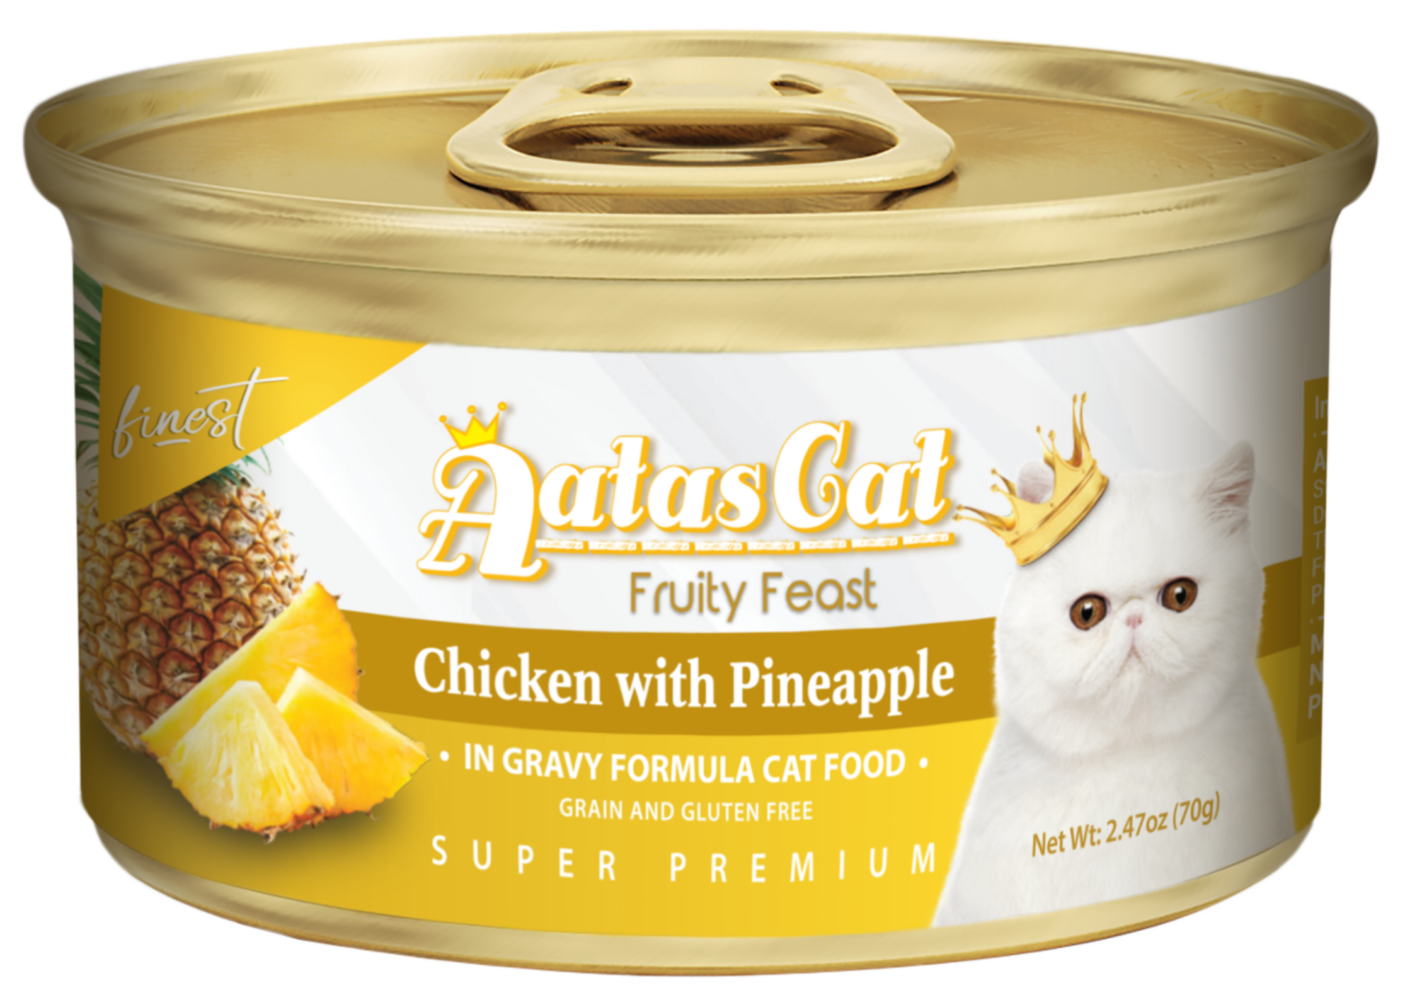 Aatas Cat Finest Fruity Feast Chicken with Pineapple in Gravy 70g